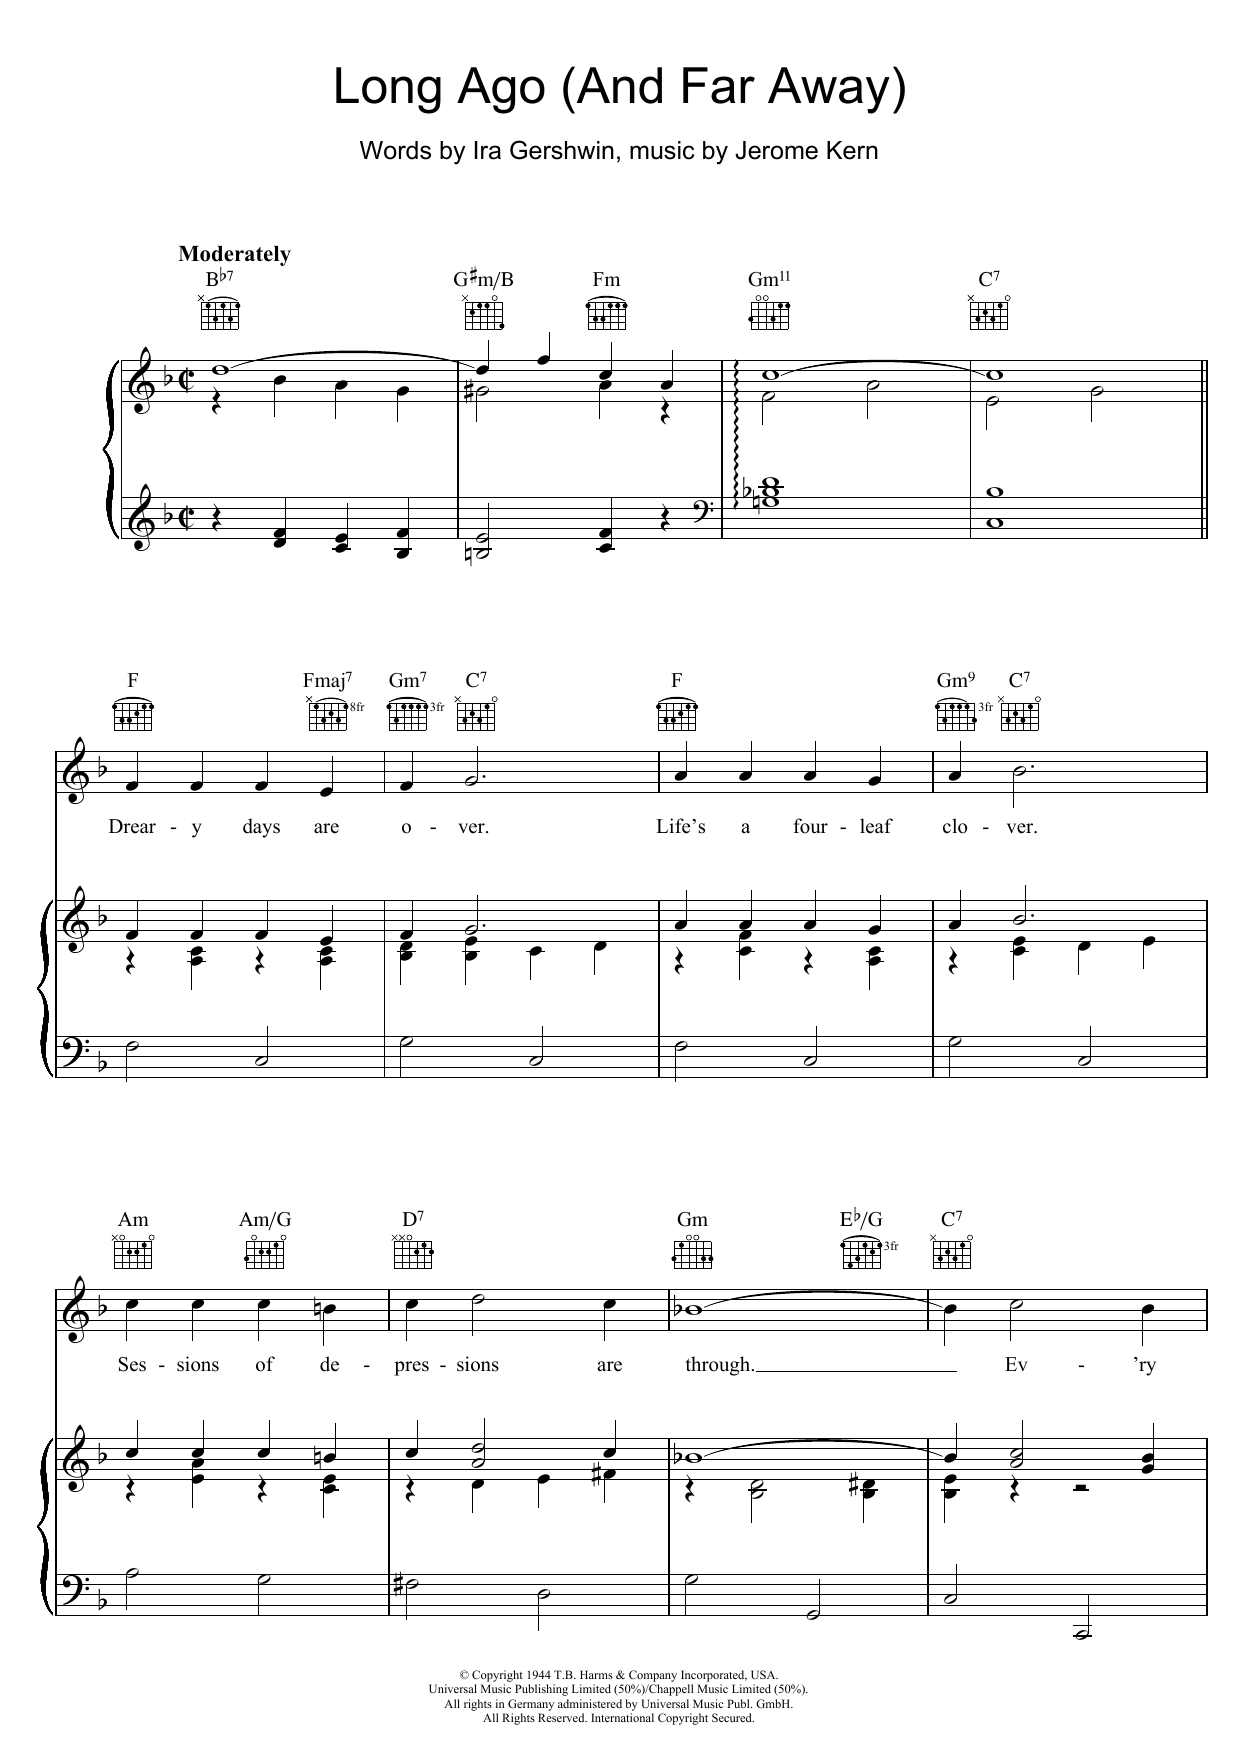 Ira Gershwin Long Ago (And Far Away) Sheet Music Notes & Chords for Violin - Download or Print PDF